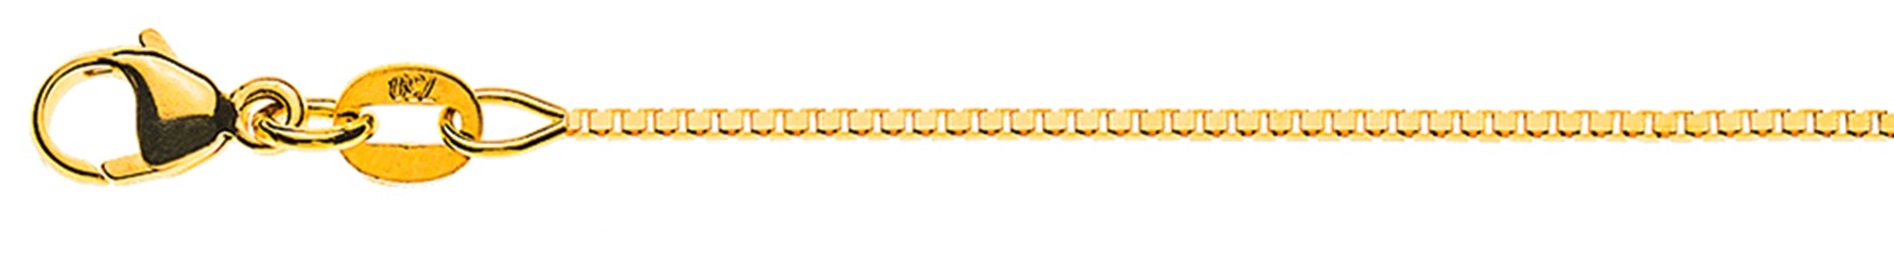 AURONOS Élégance Halskette Gelbgold 14K Venezianerkette diamantiert 38cm 0.9mm